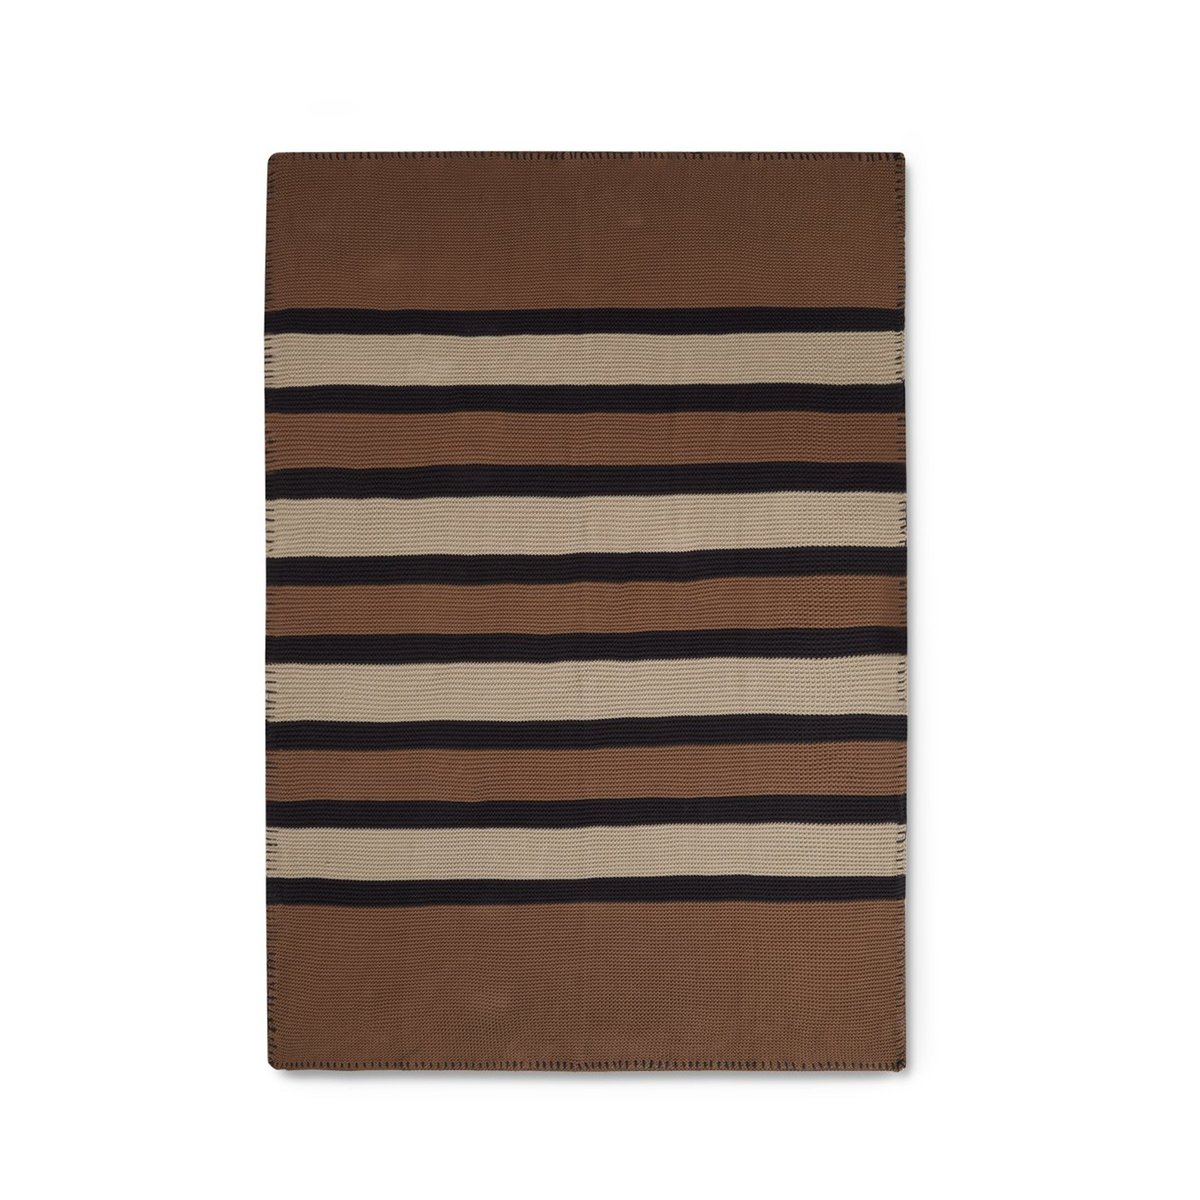 Lexington Striped Knitted Cotton pledd 130 x 170 cm Brown-beige-dark gray